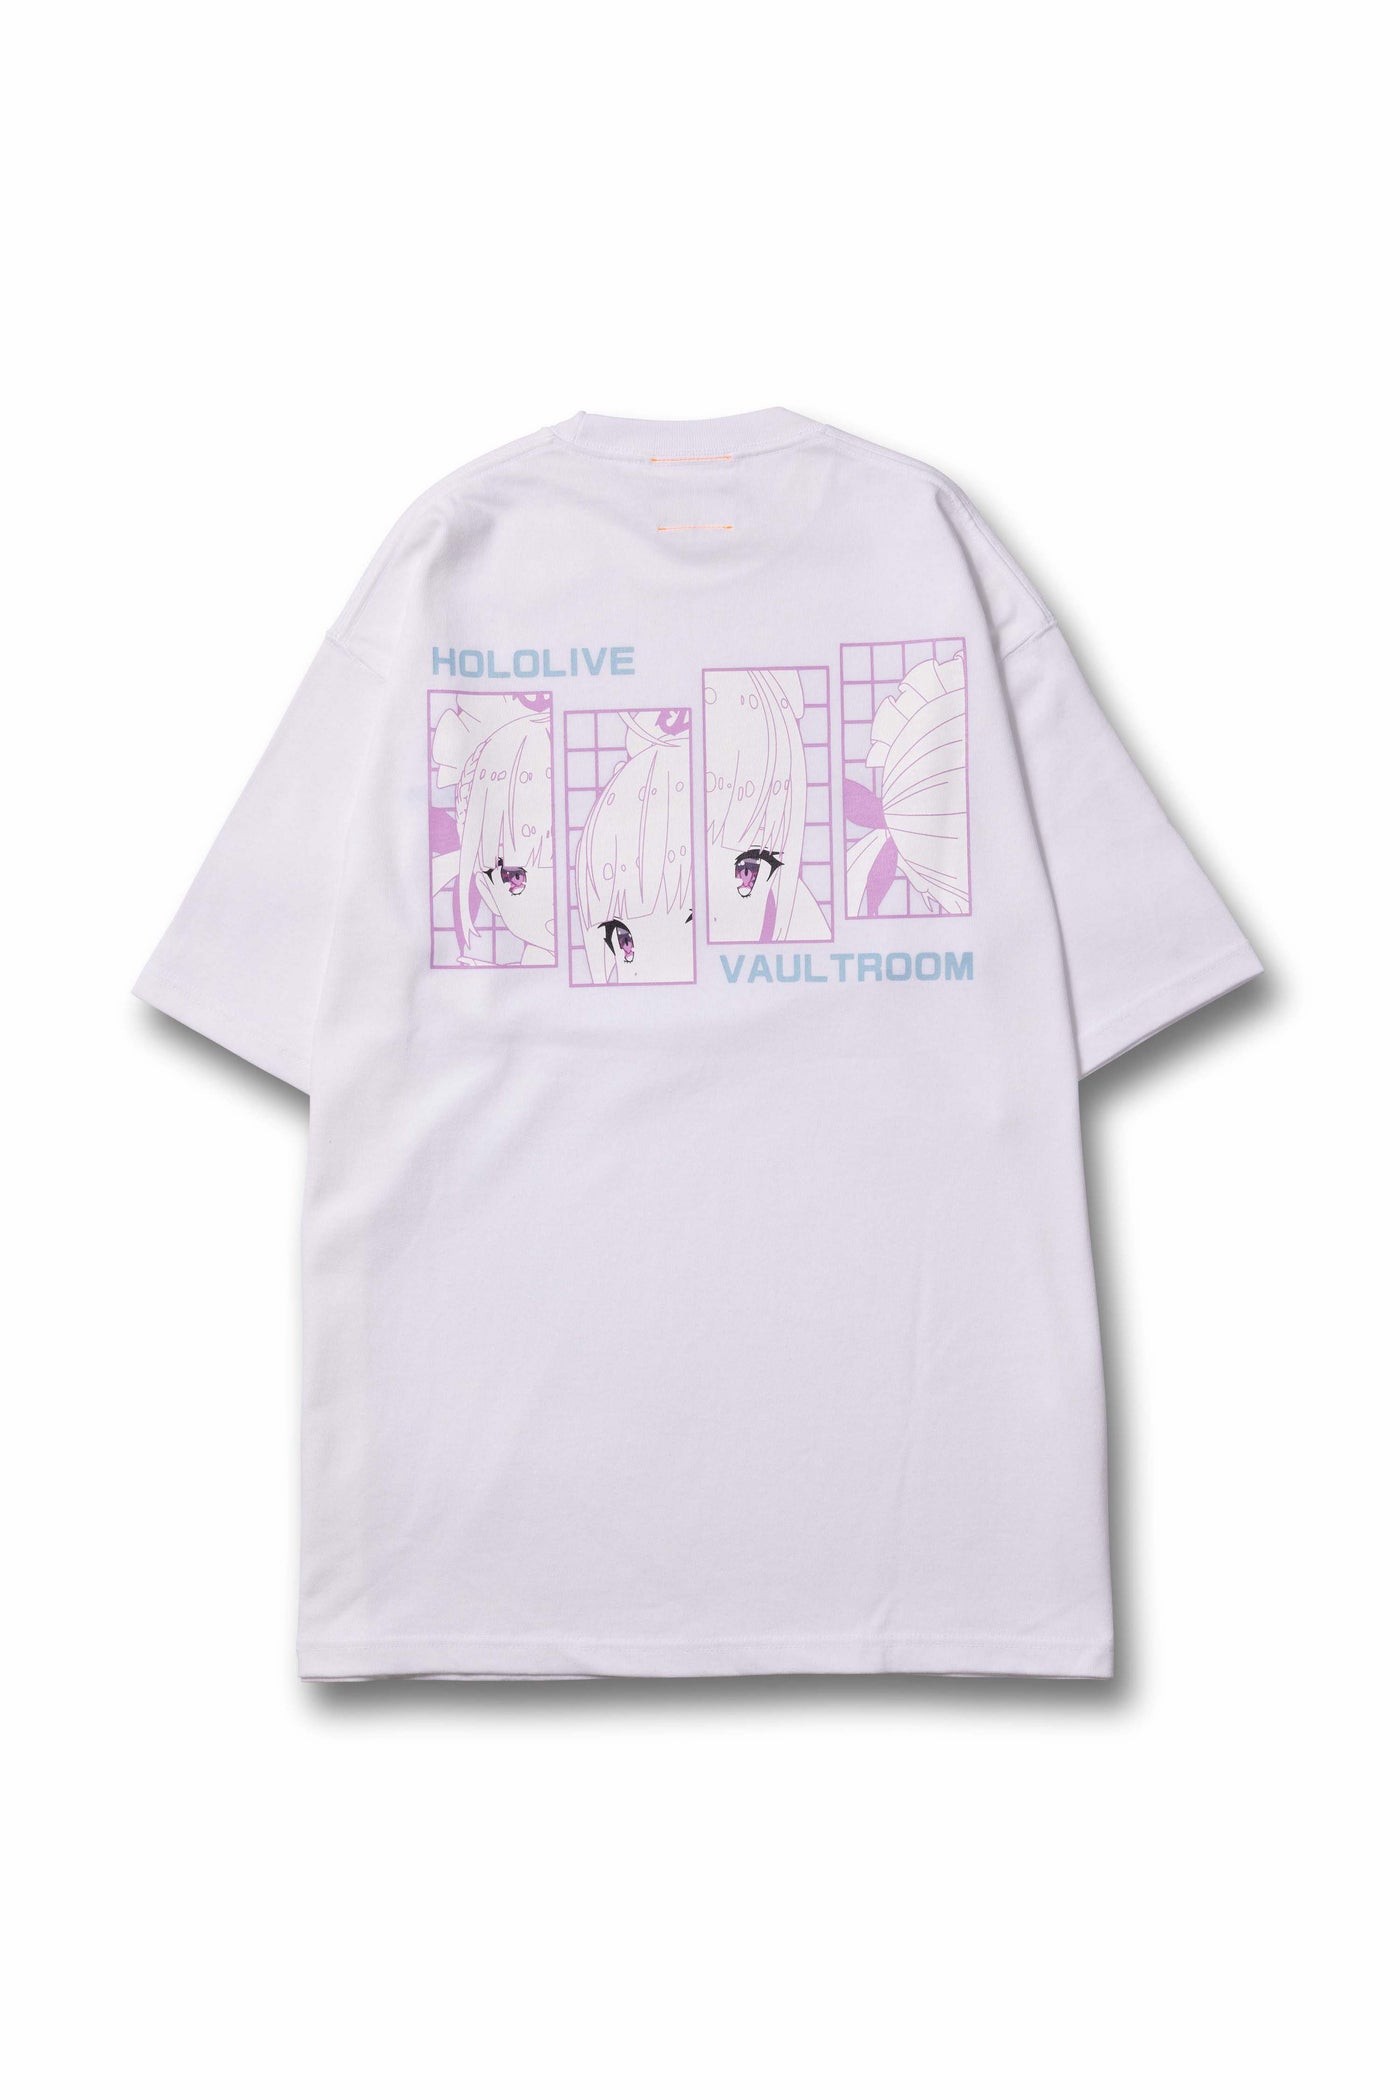 MINATO AQUA TEE / WHT M vaultroom - Tシャツ/カットソー(半袖/袖なし)